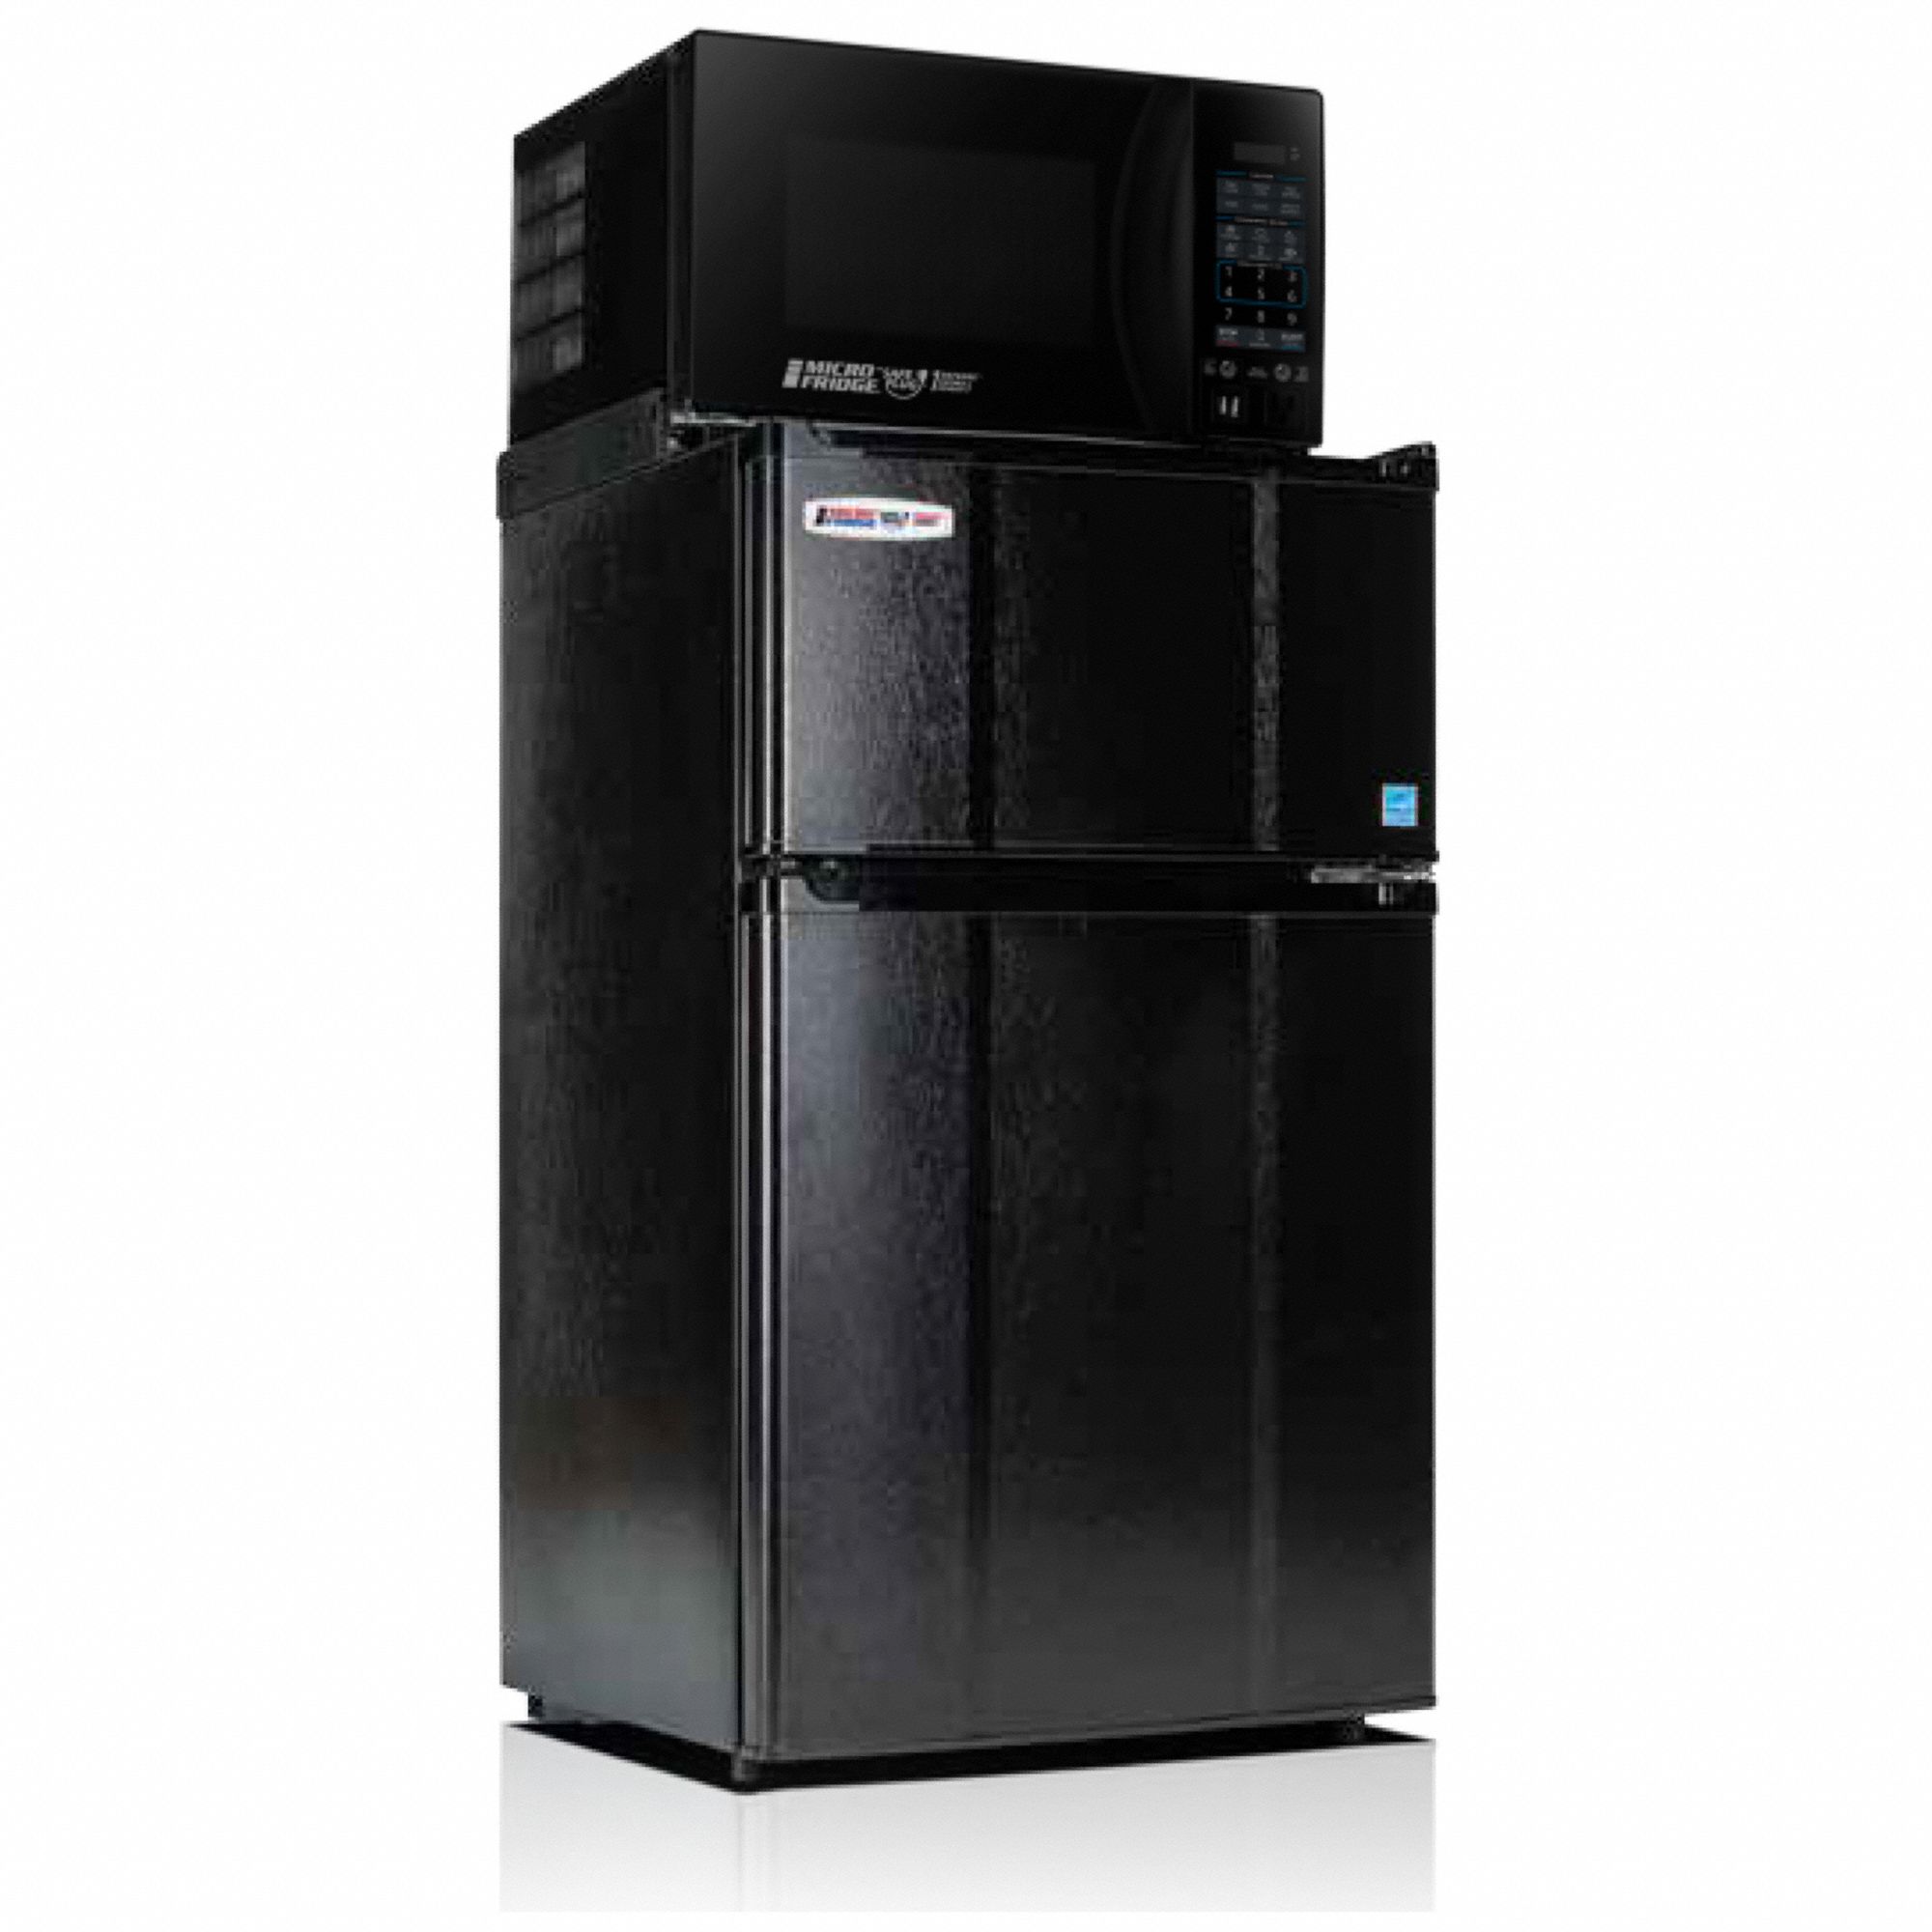 Refrigerator, Freezer and Microwave: 3.1 cu ft Total Capacity, Black